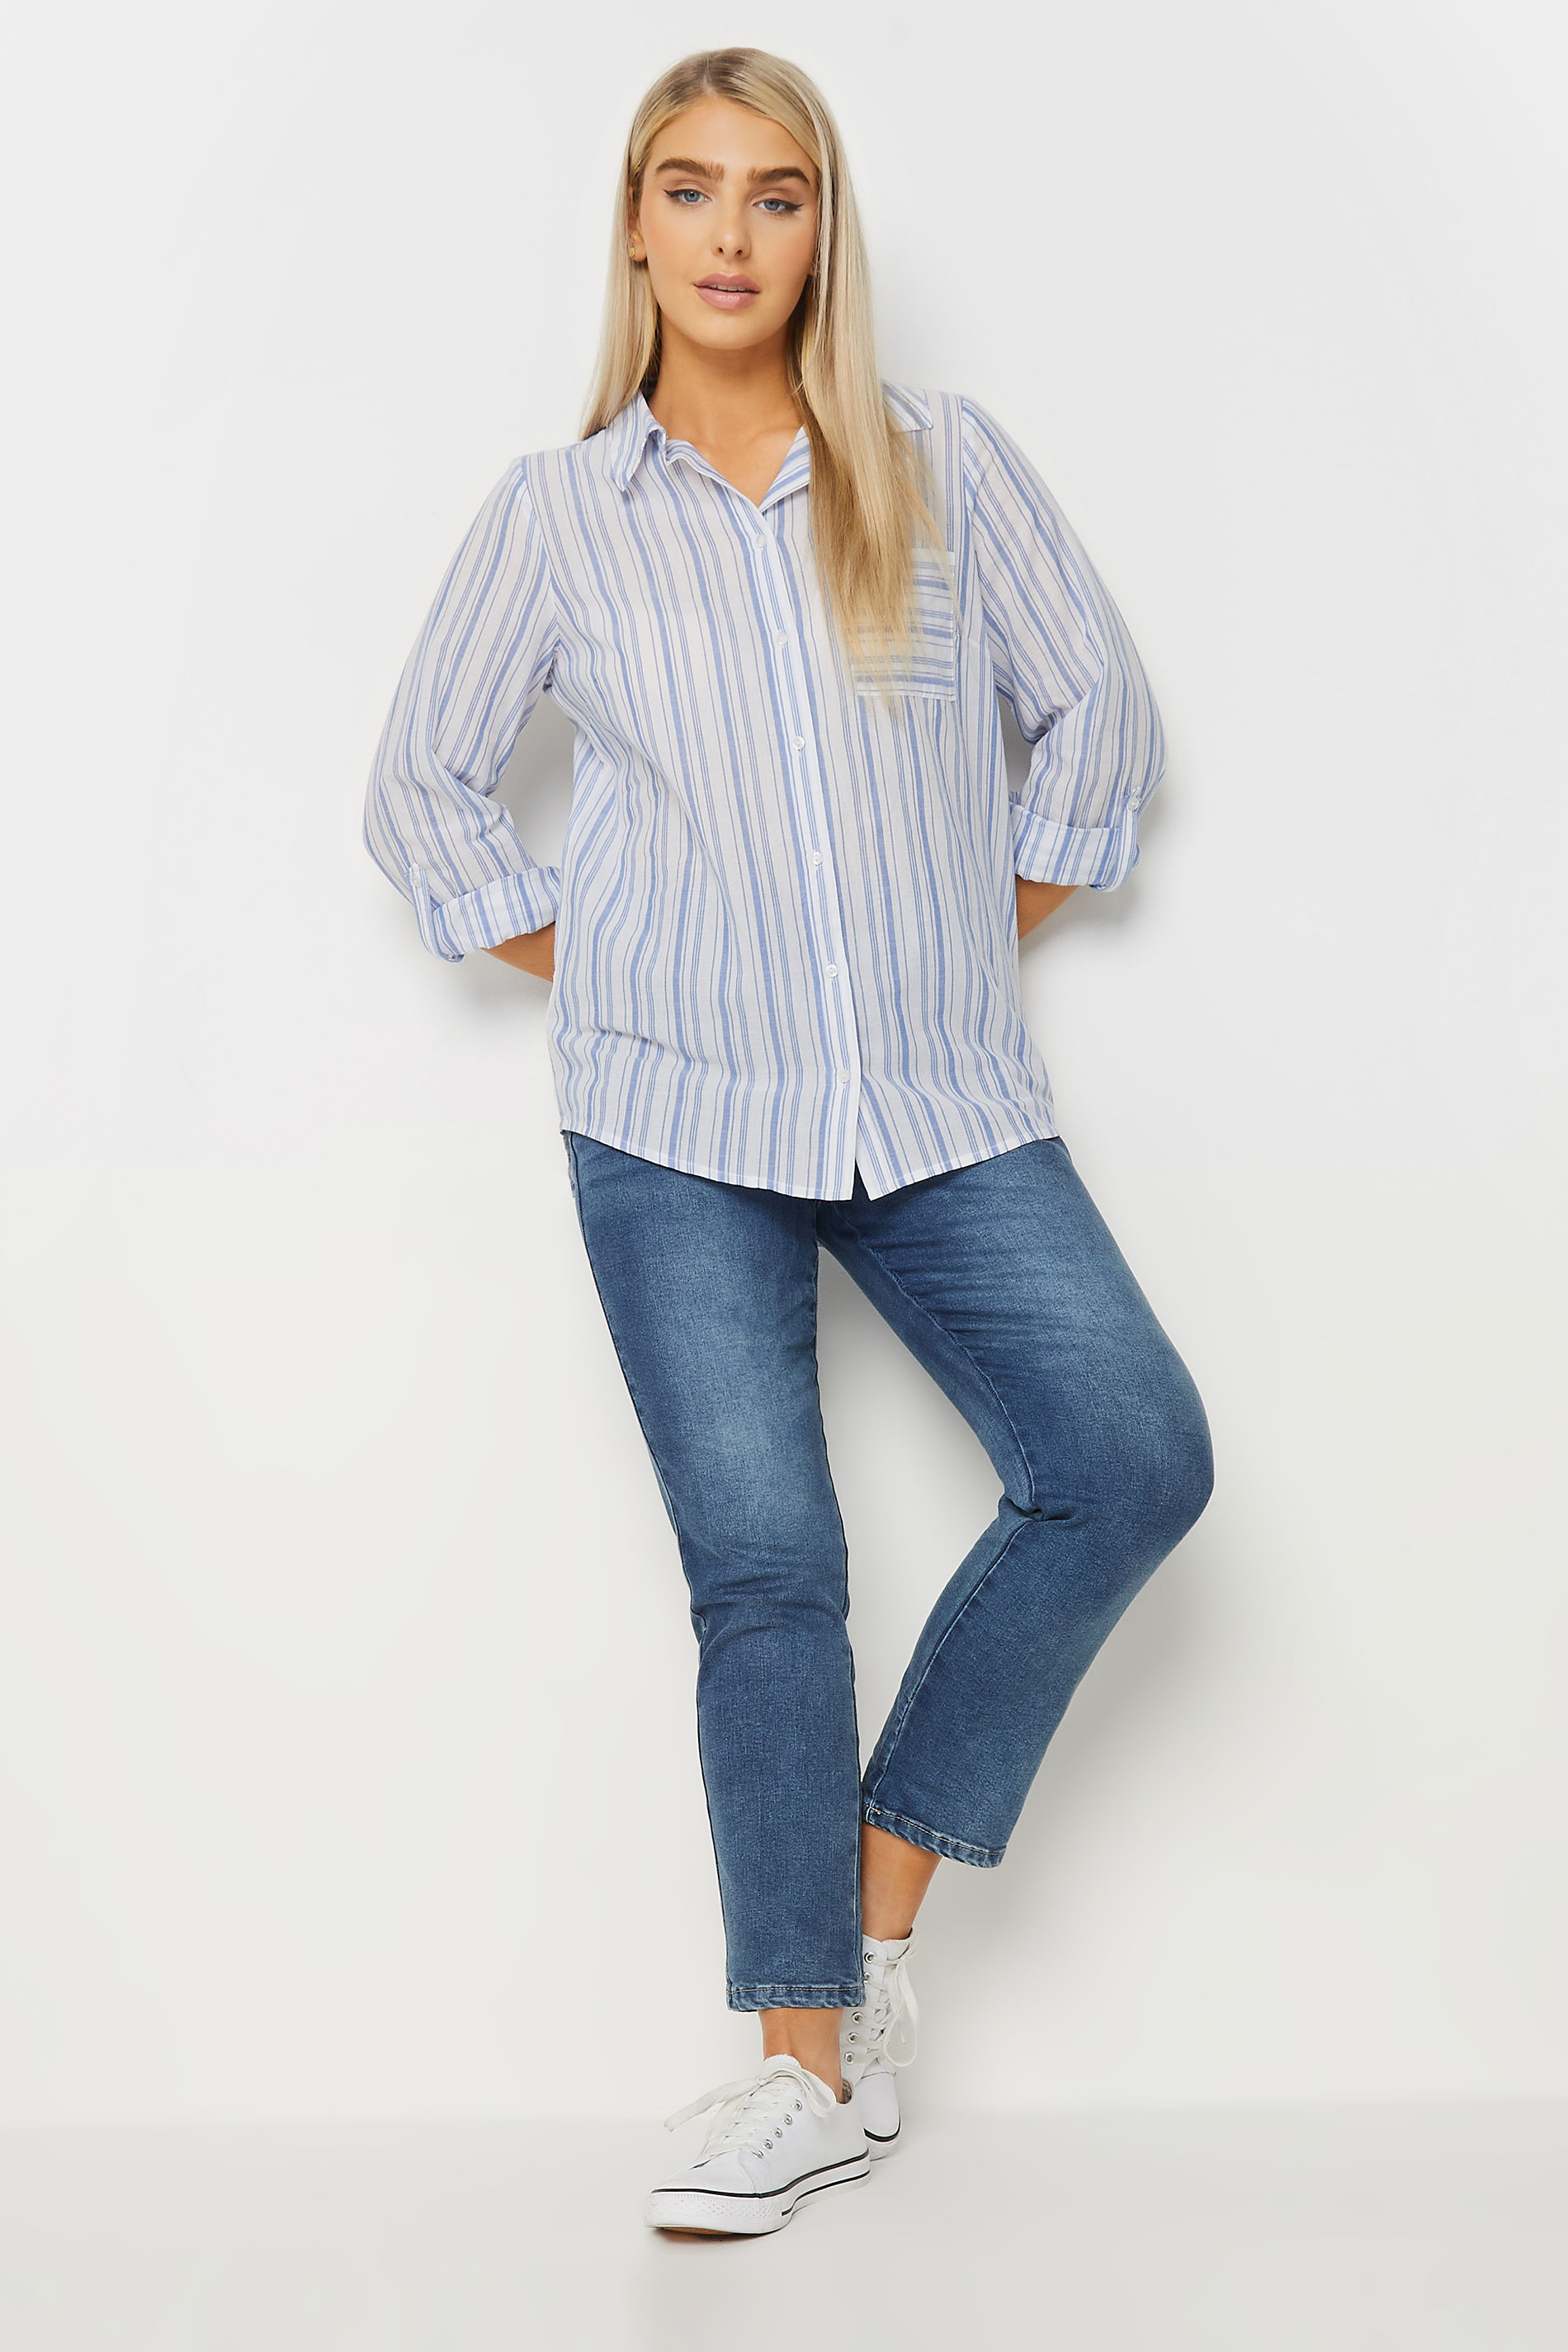 M&Co White & Blue Striped Tab Sleeve Shirt | M&Co 2